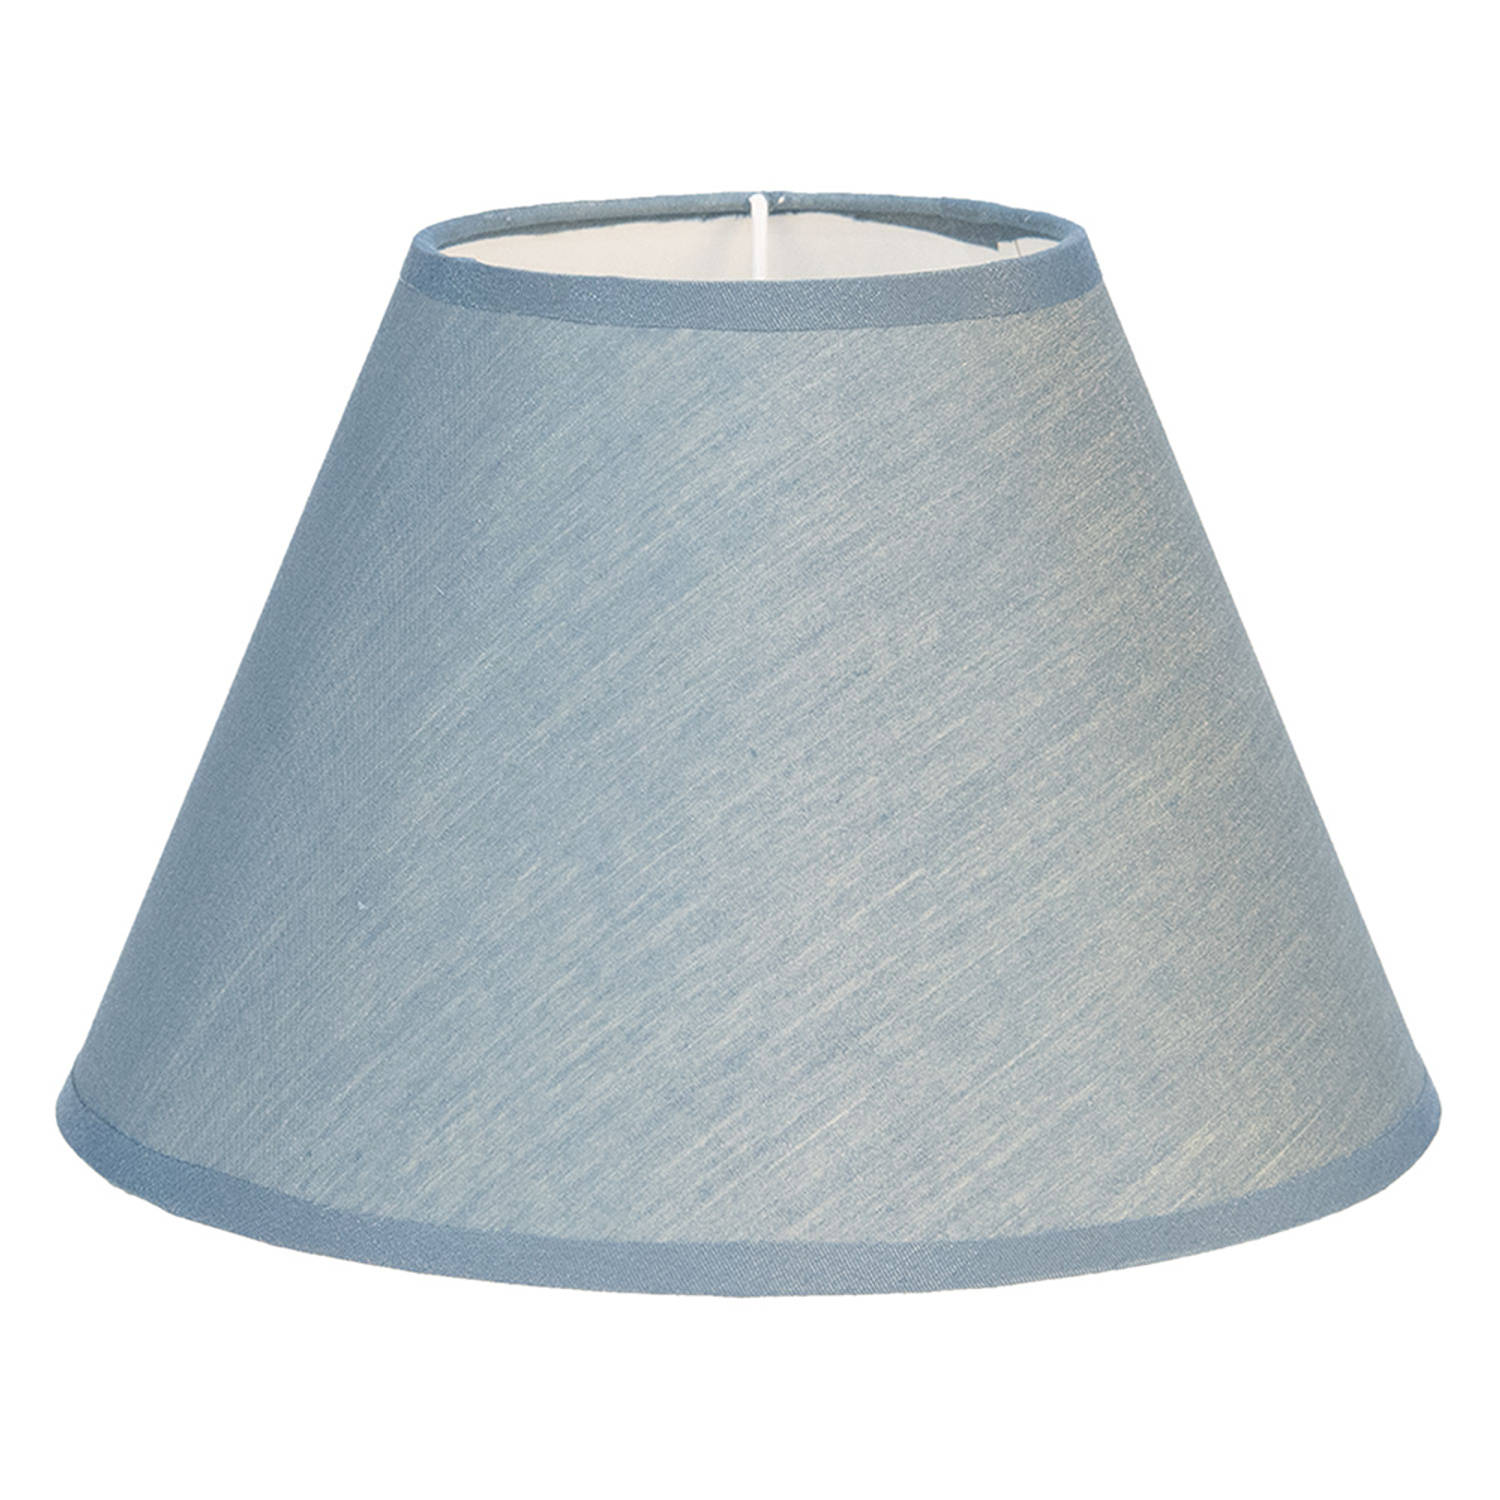 HAES DECO Lampenkap Modern Chic blauw rond formaat Ø 37x20 cm, voor Fitting E27 Tafellamp, Hanglamp